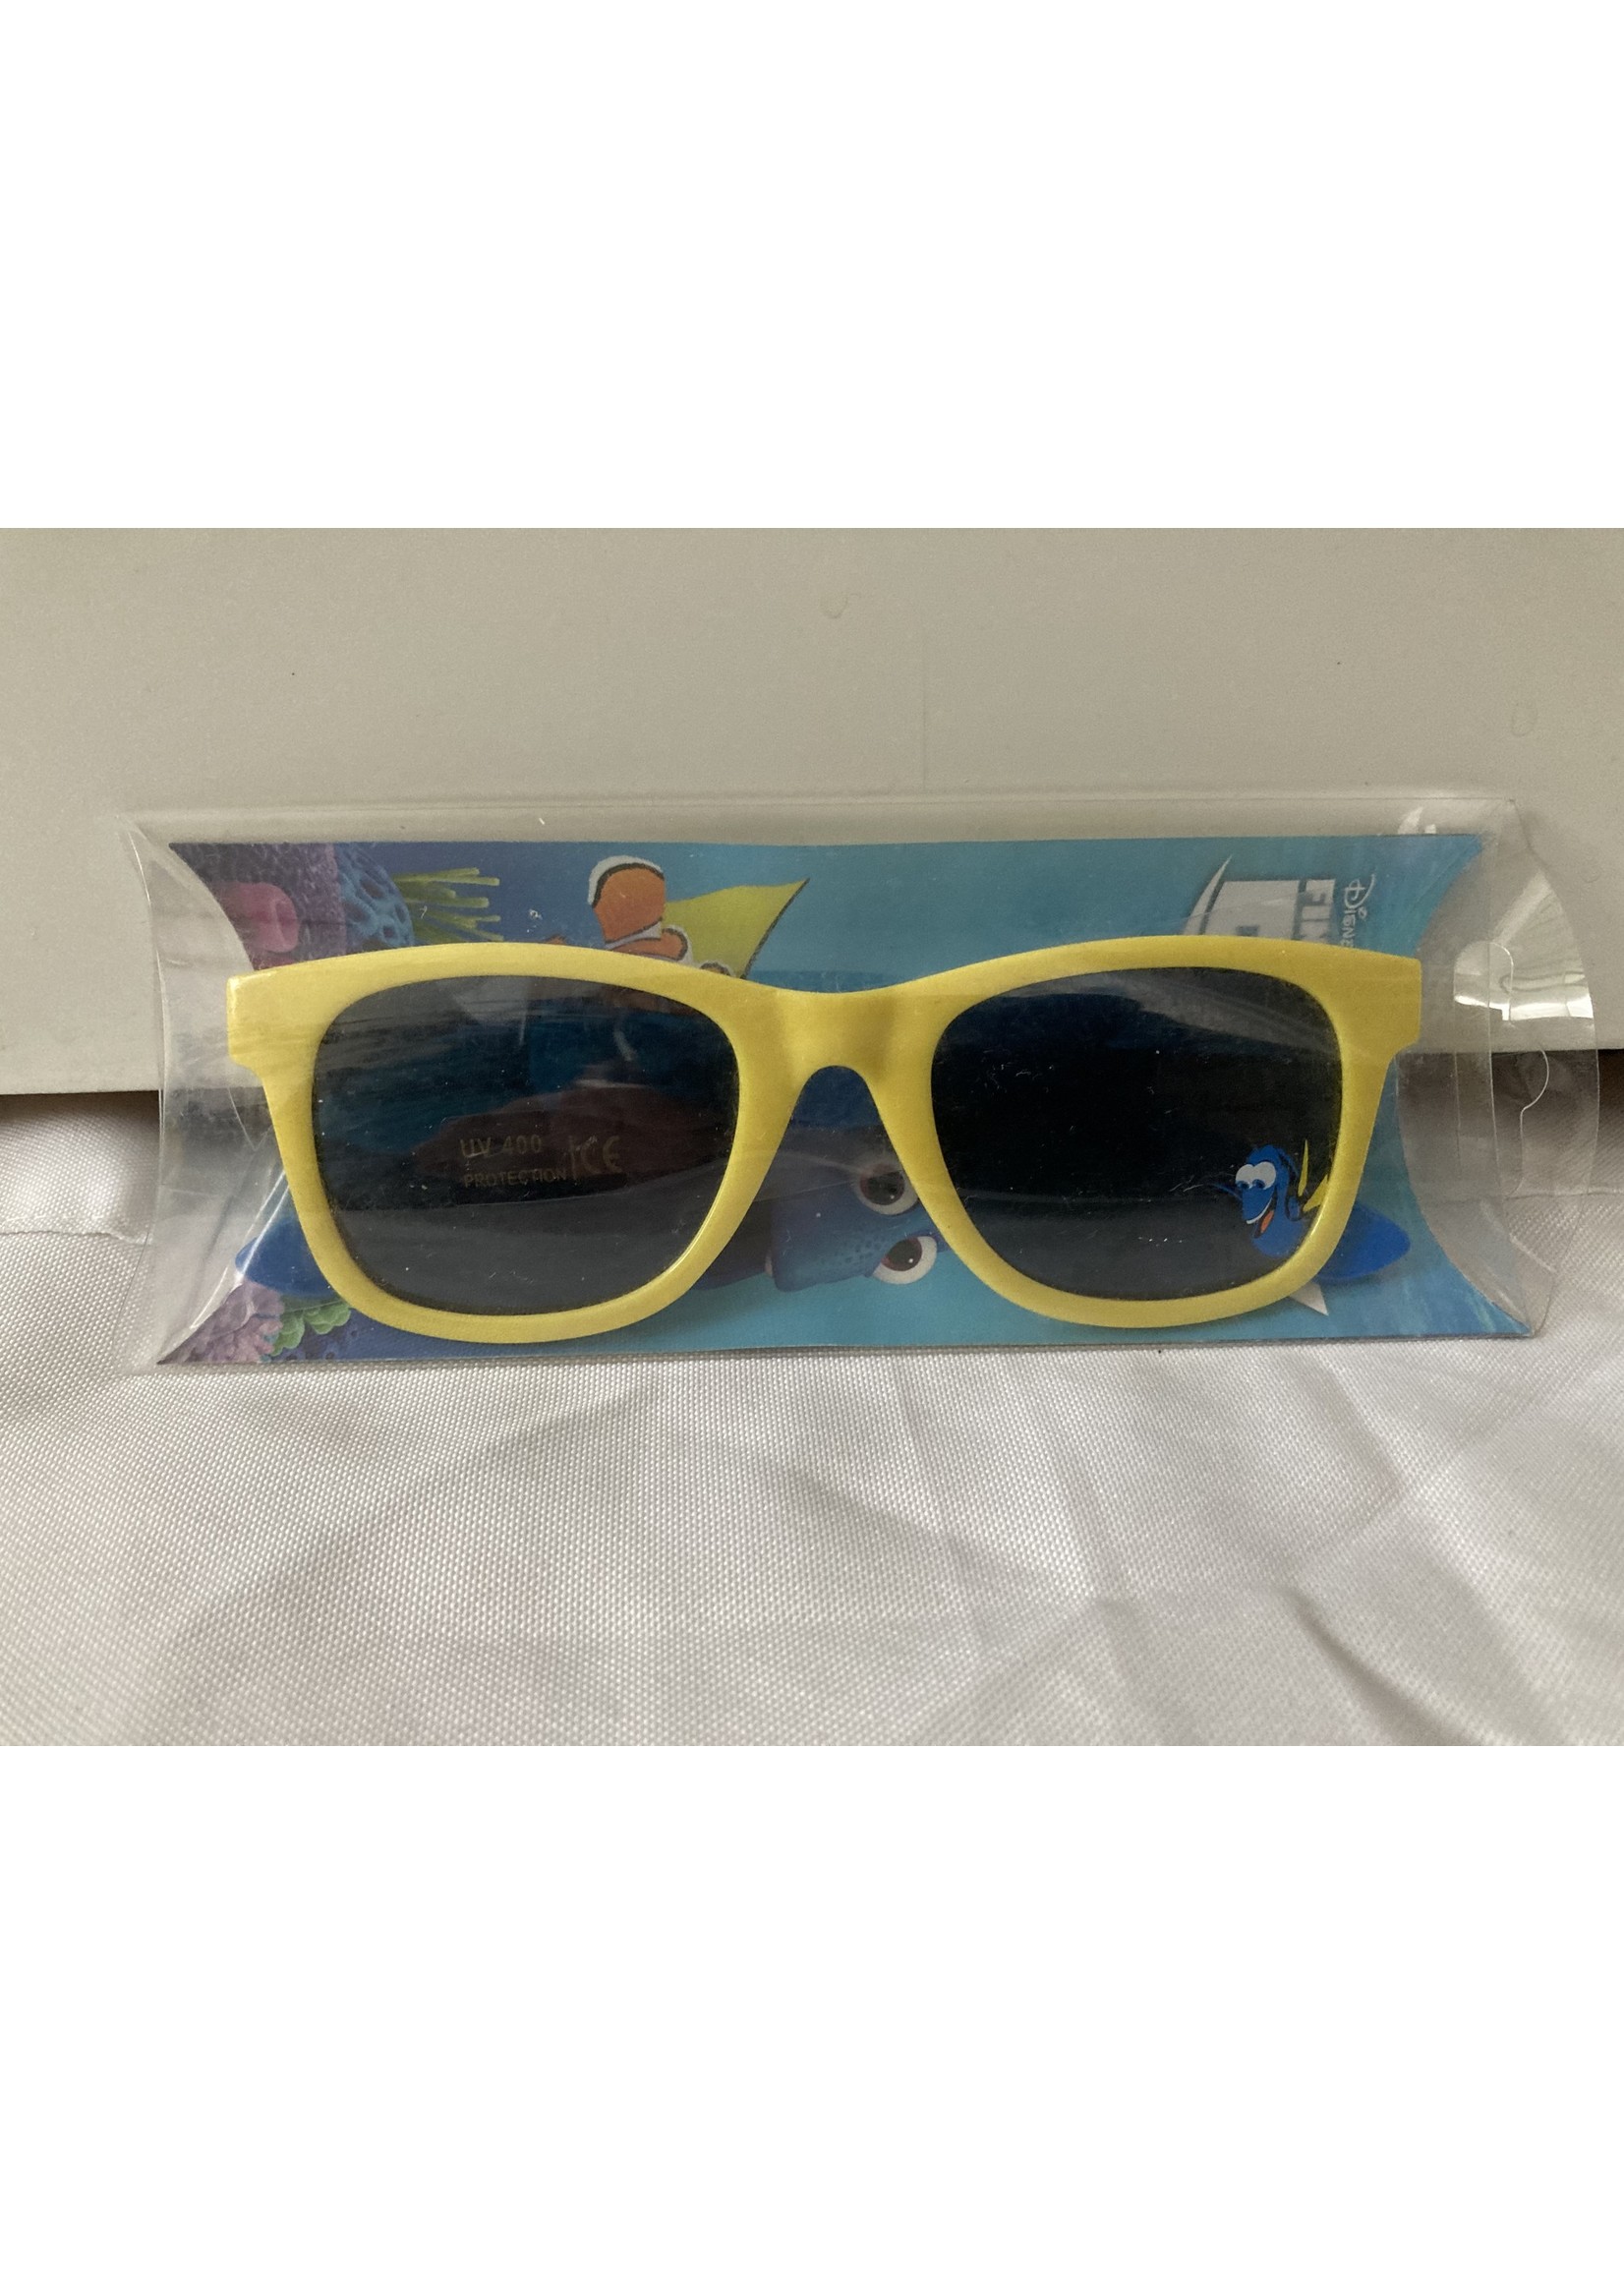 Disney Finding Dory sunglasses from Disney yellow